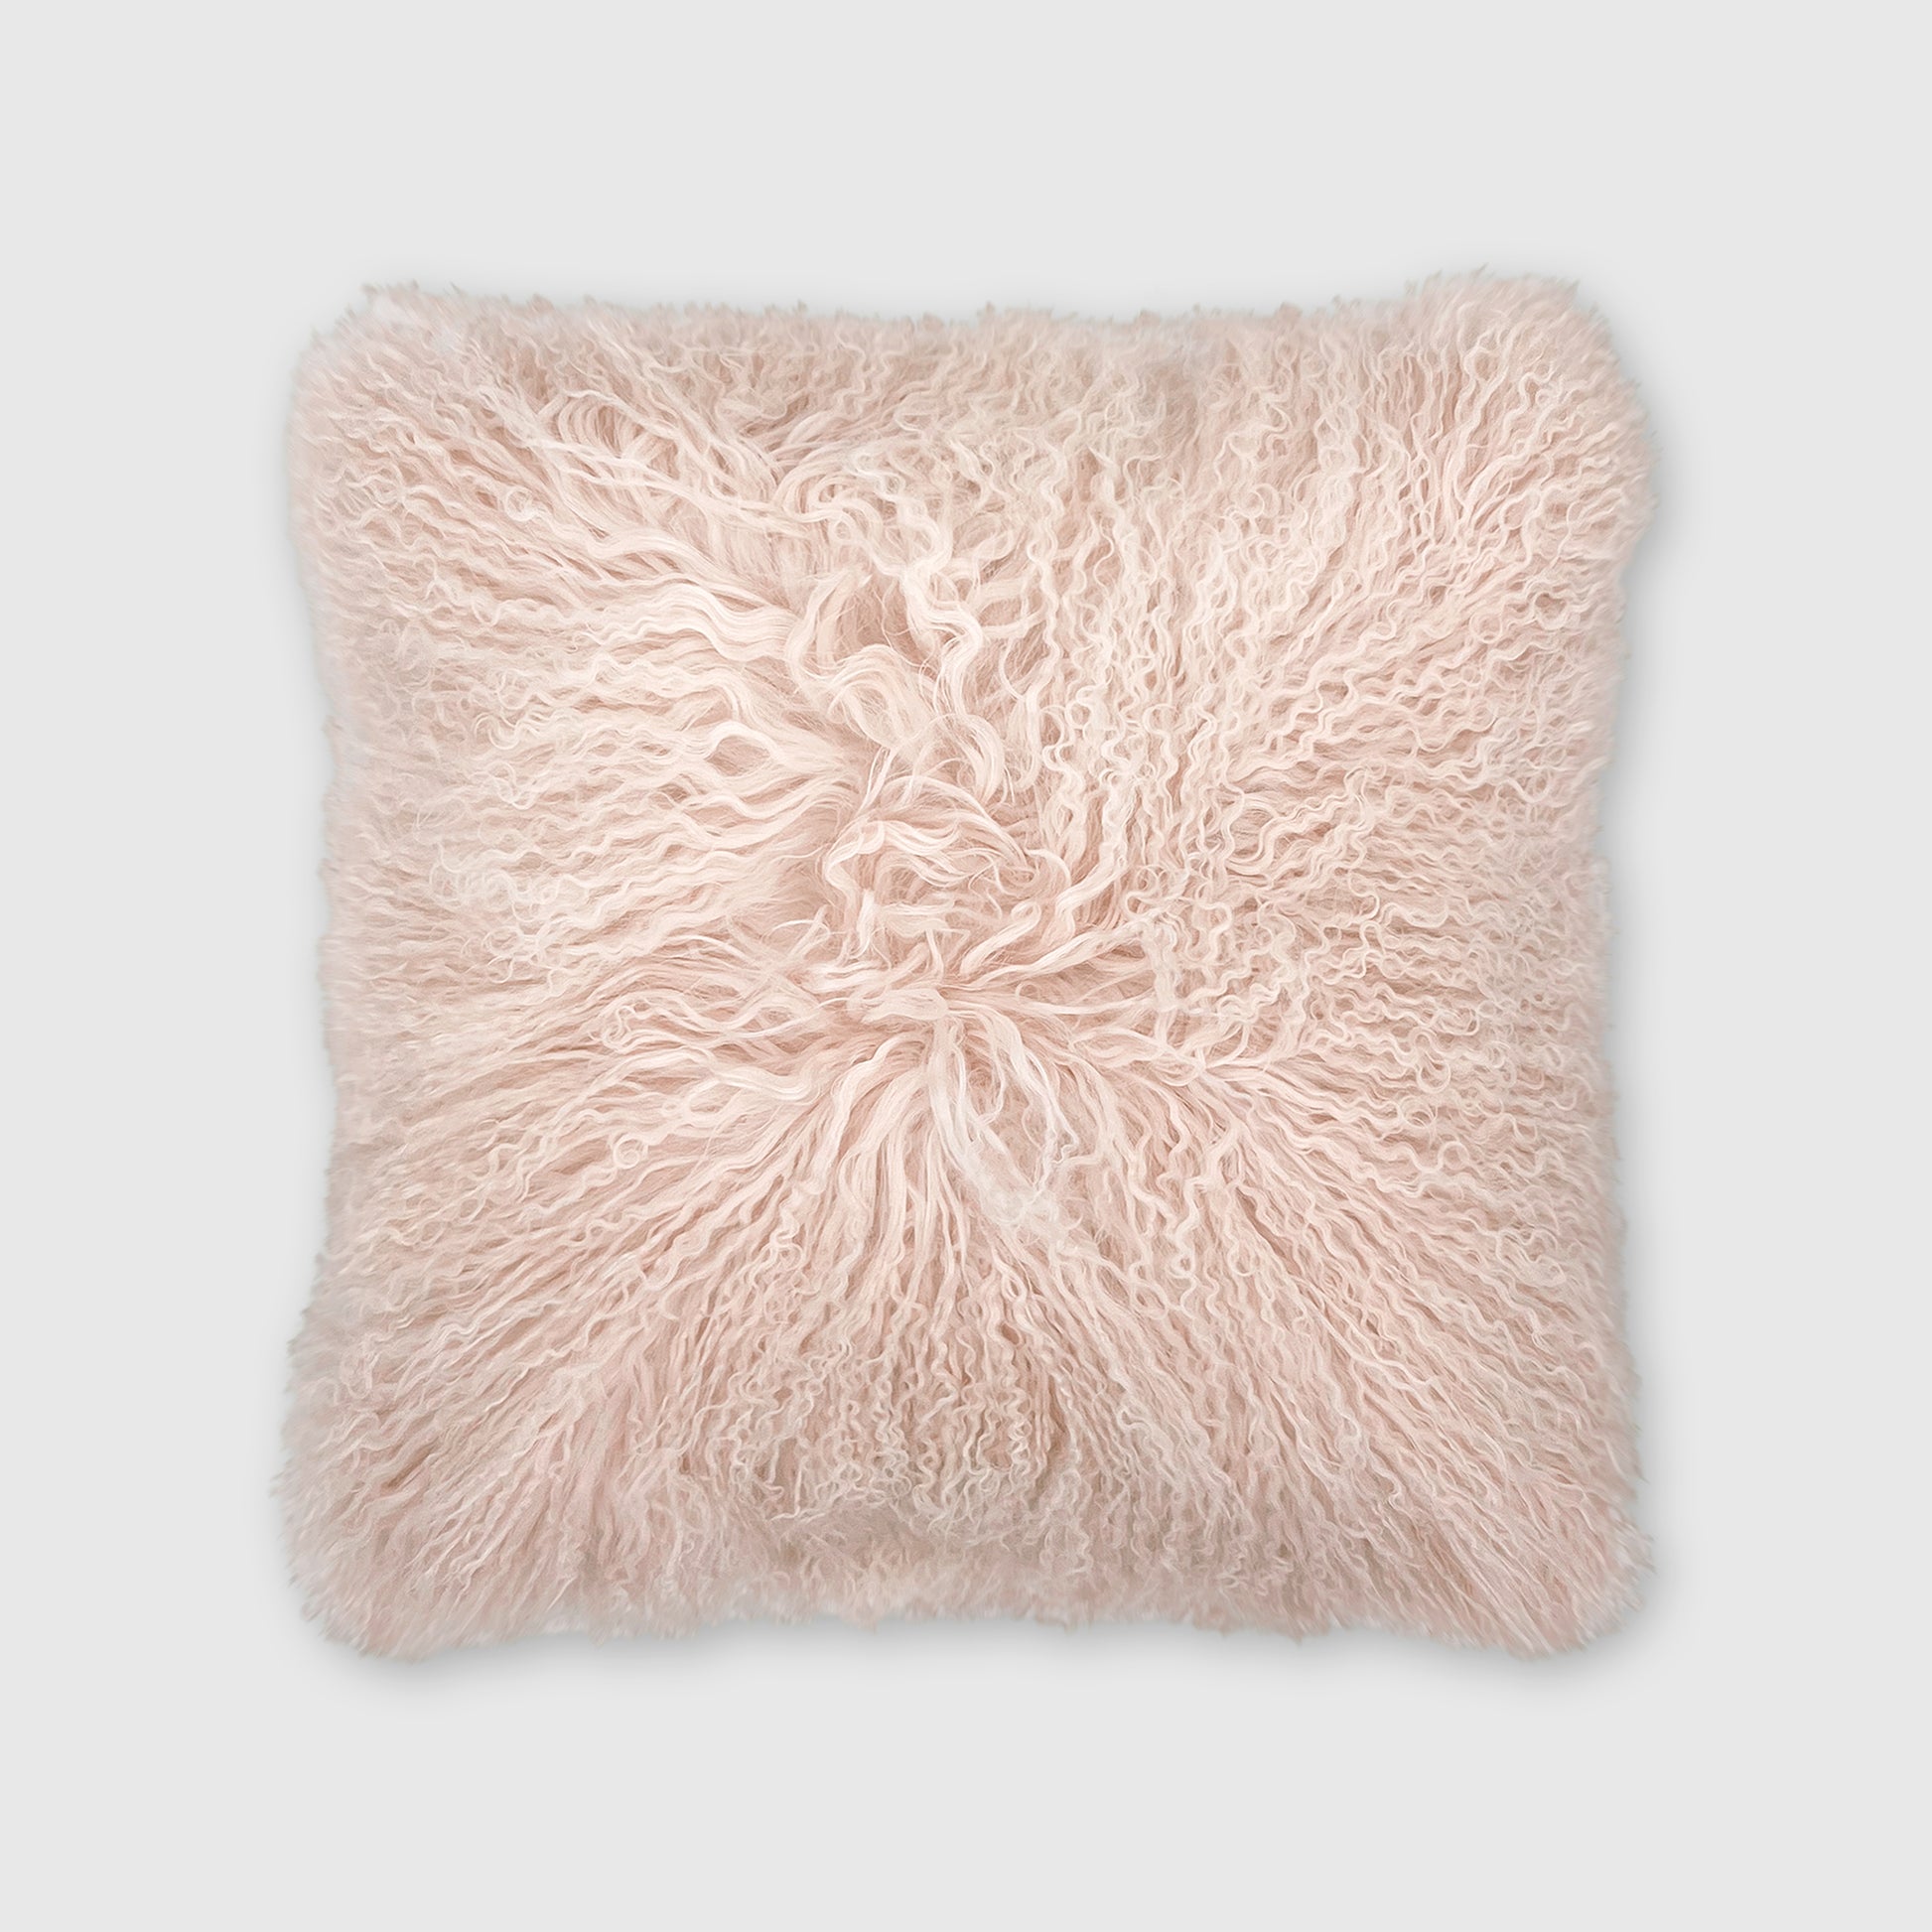 The Mood | Gobi Mongolian Lambskin 20”x20” Pillow, Cloud Pink